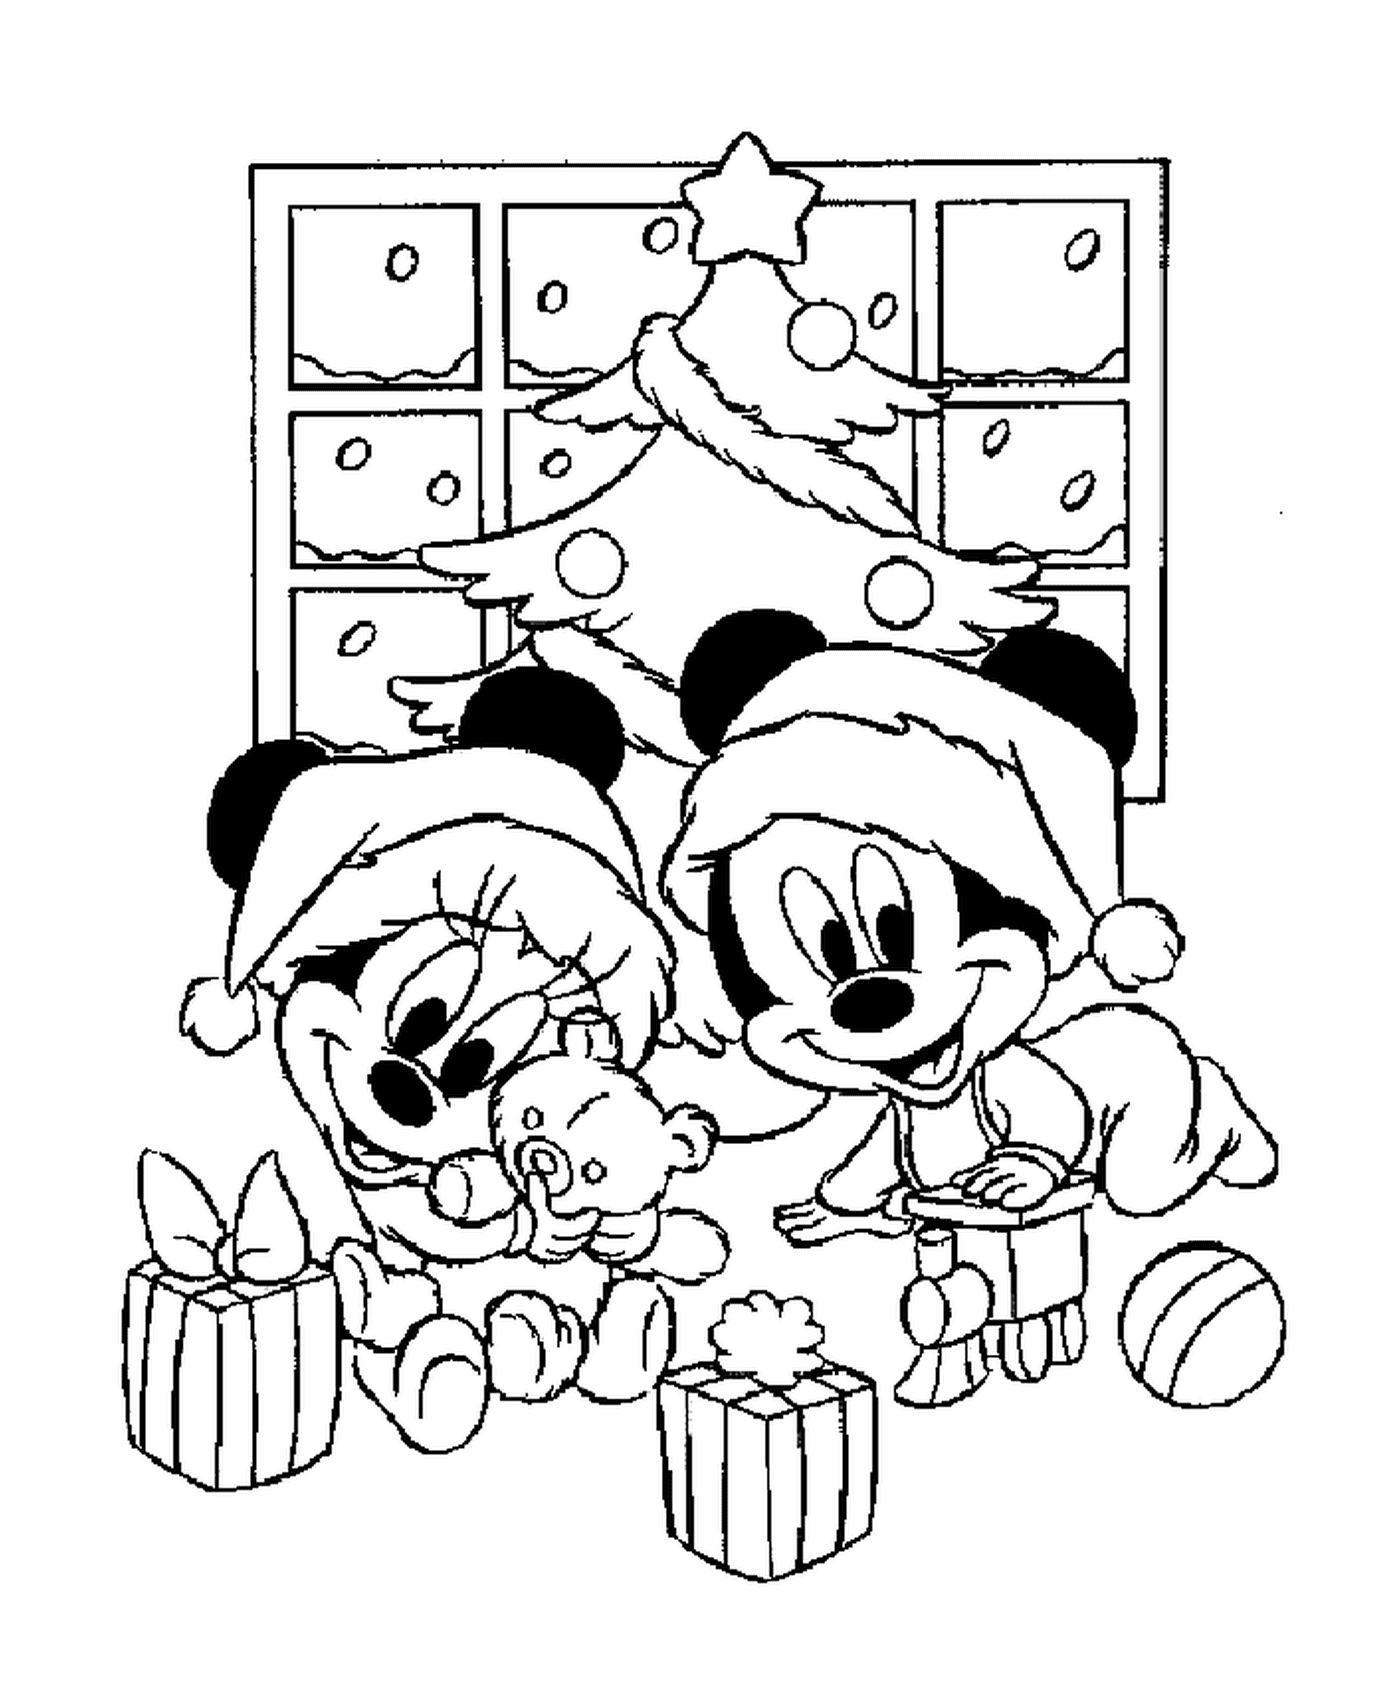  Малыши Микки и Минни играют со своими подарками перед деревом 